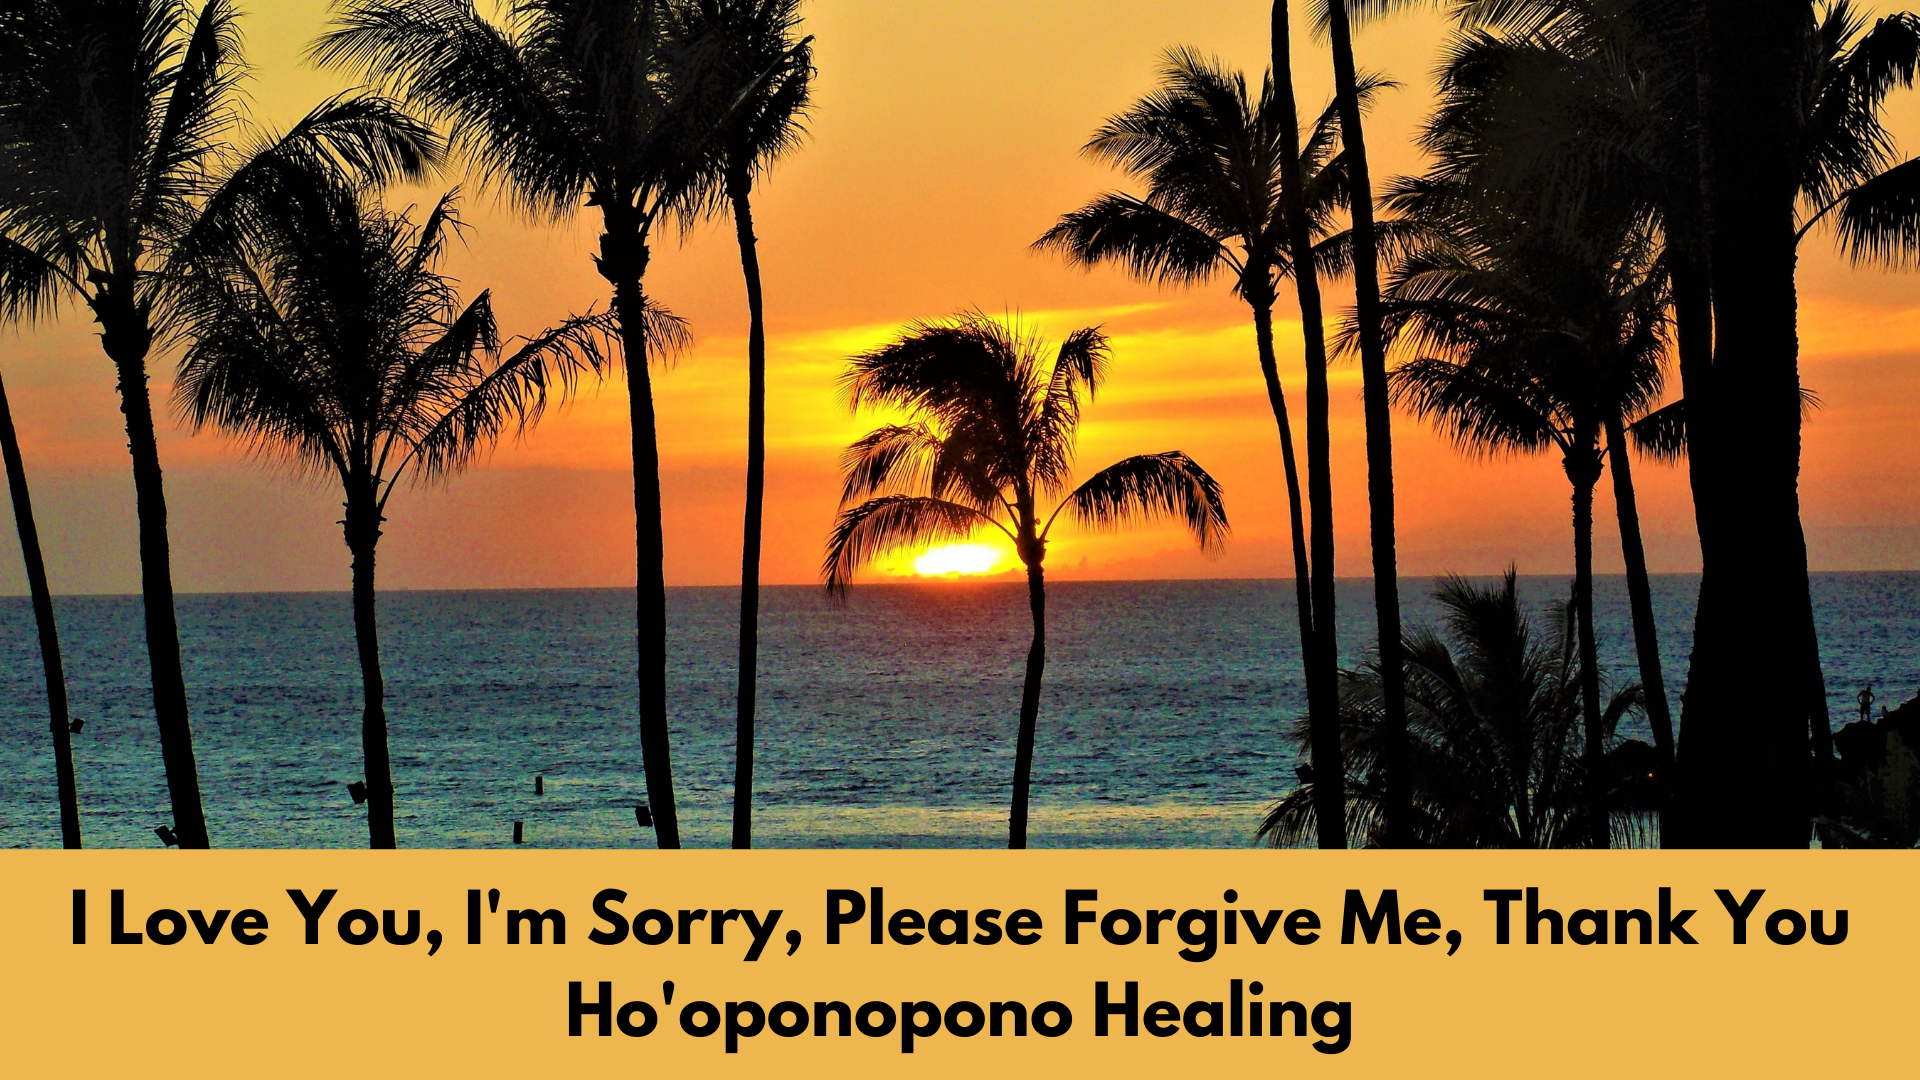 Healing The Heart with Ho’oponopono!